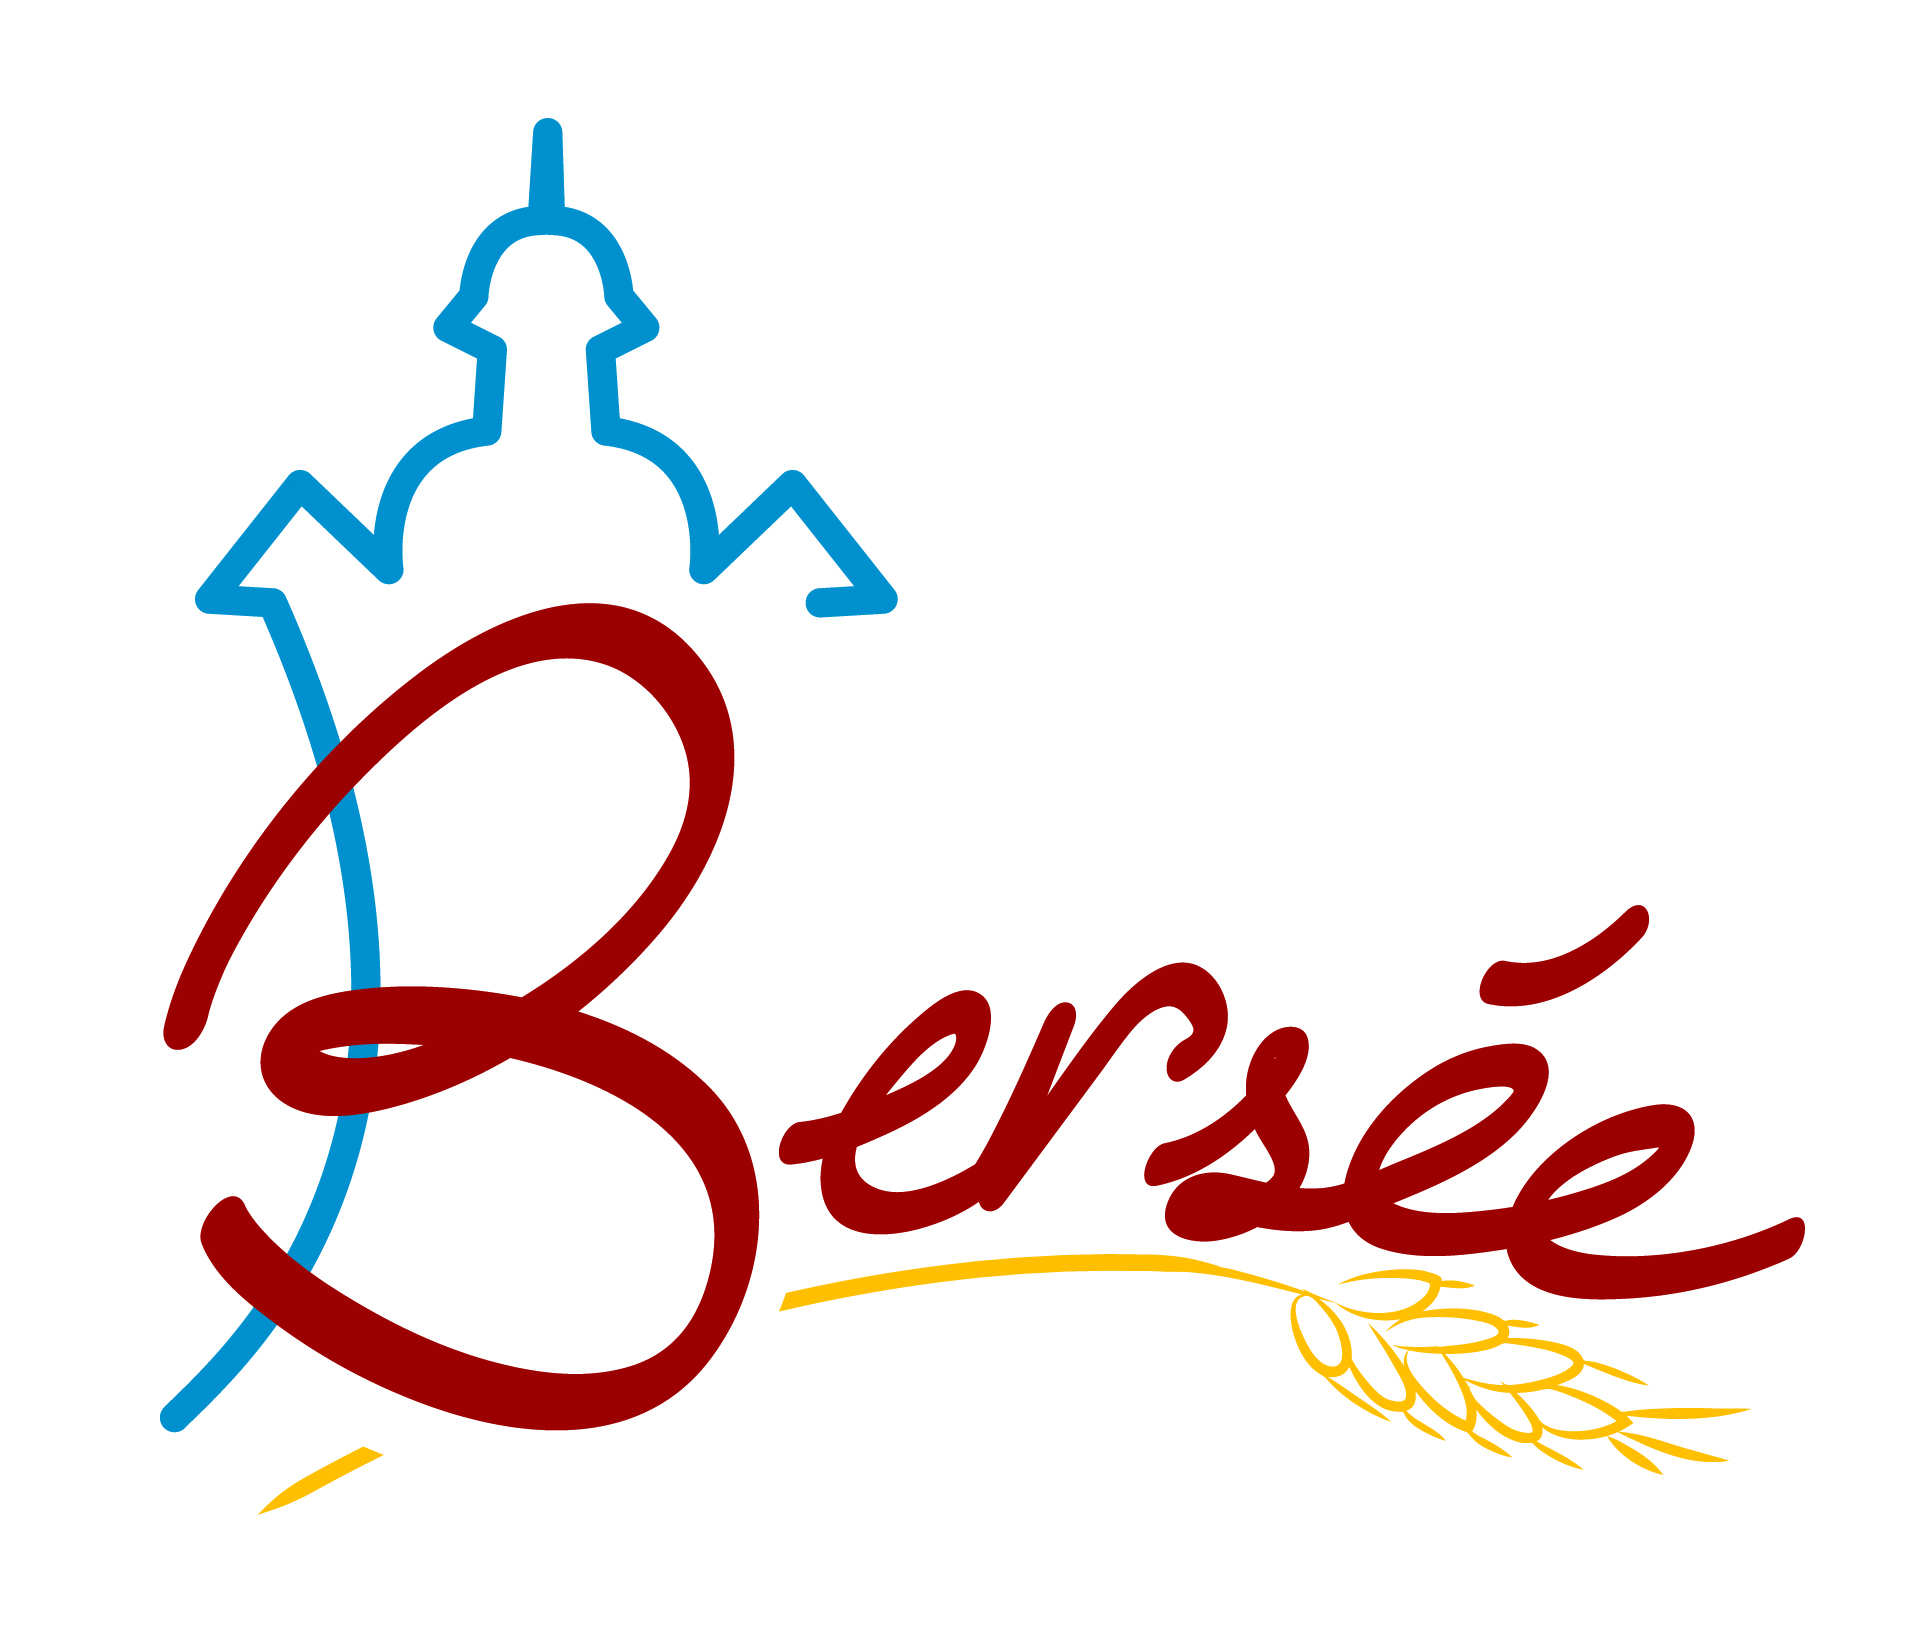 Commune de Bersée